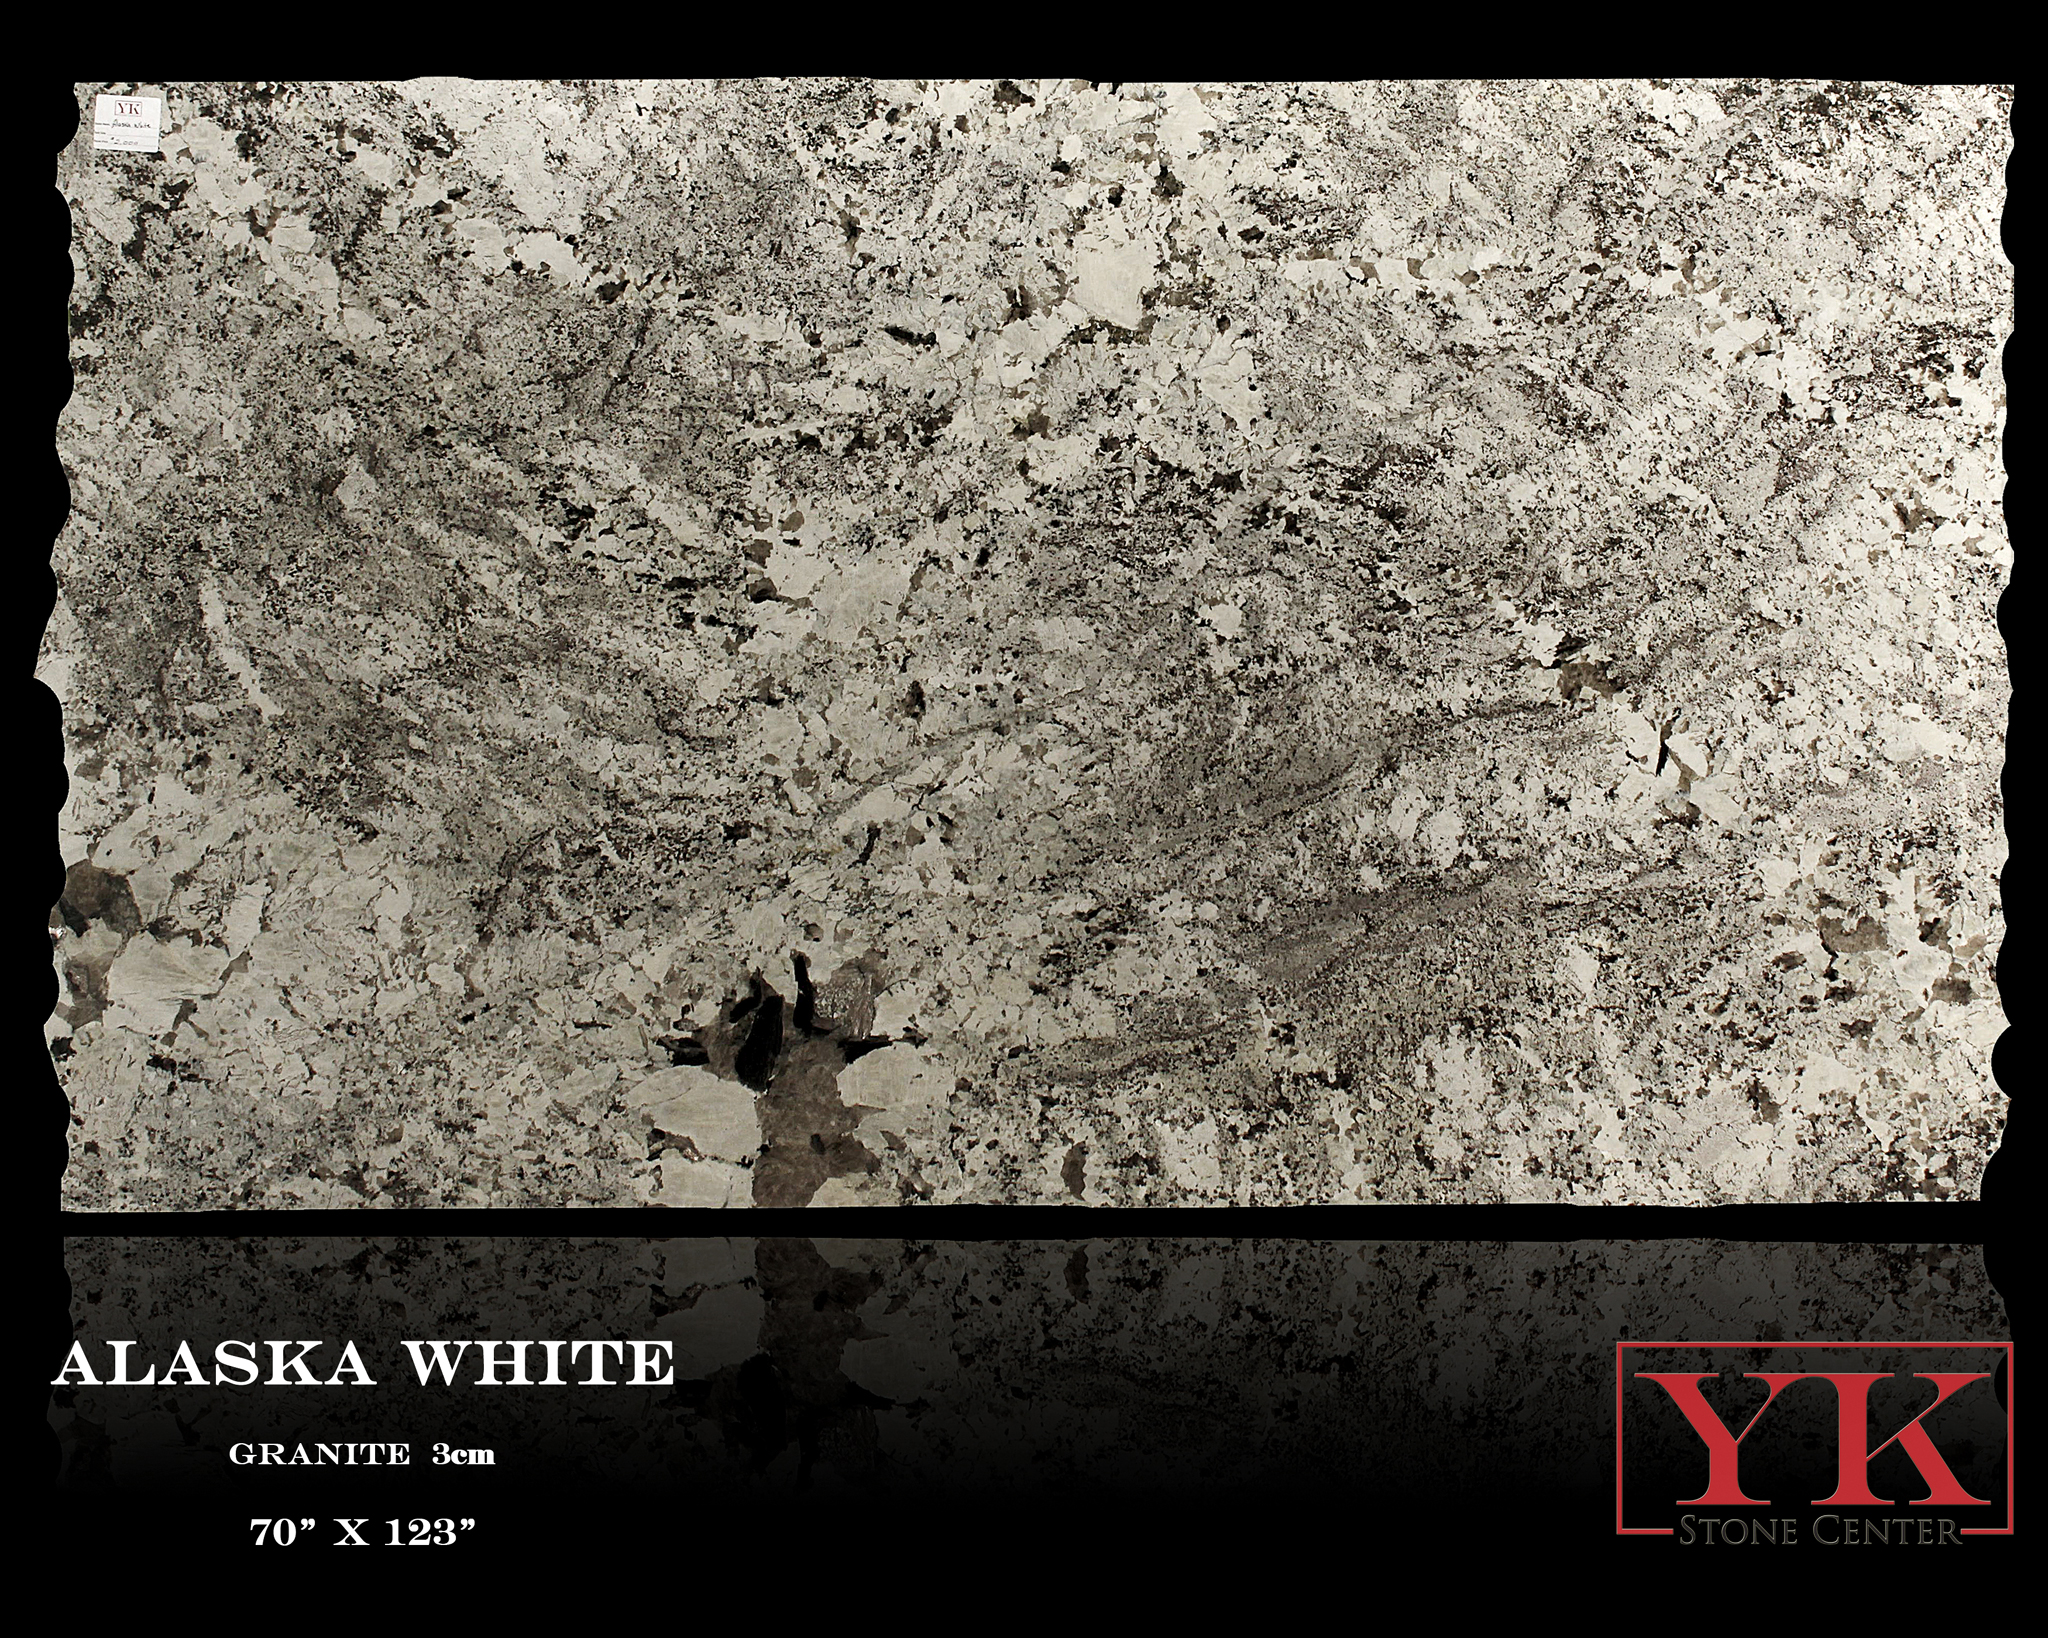 Alaska White granite slab Denver